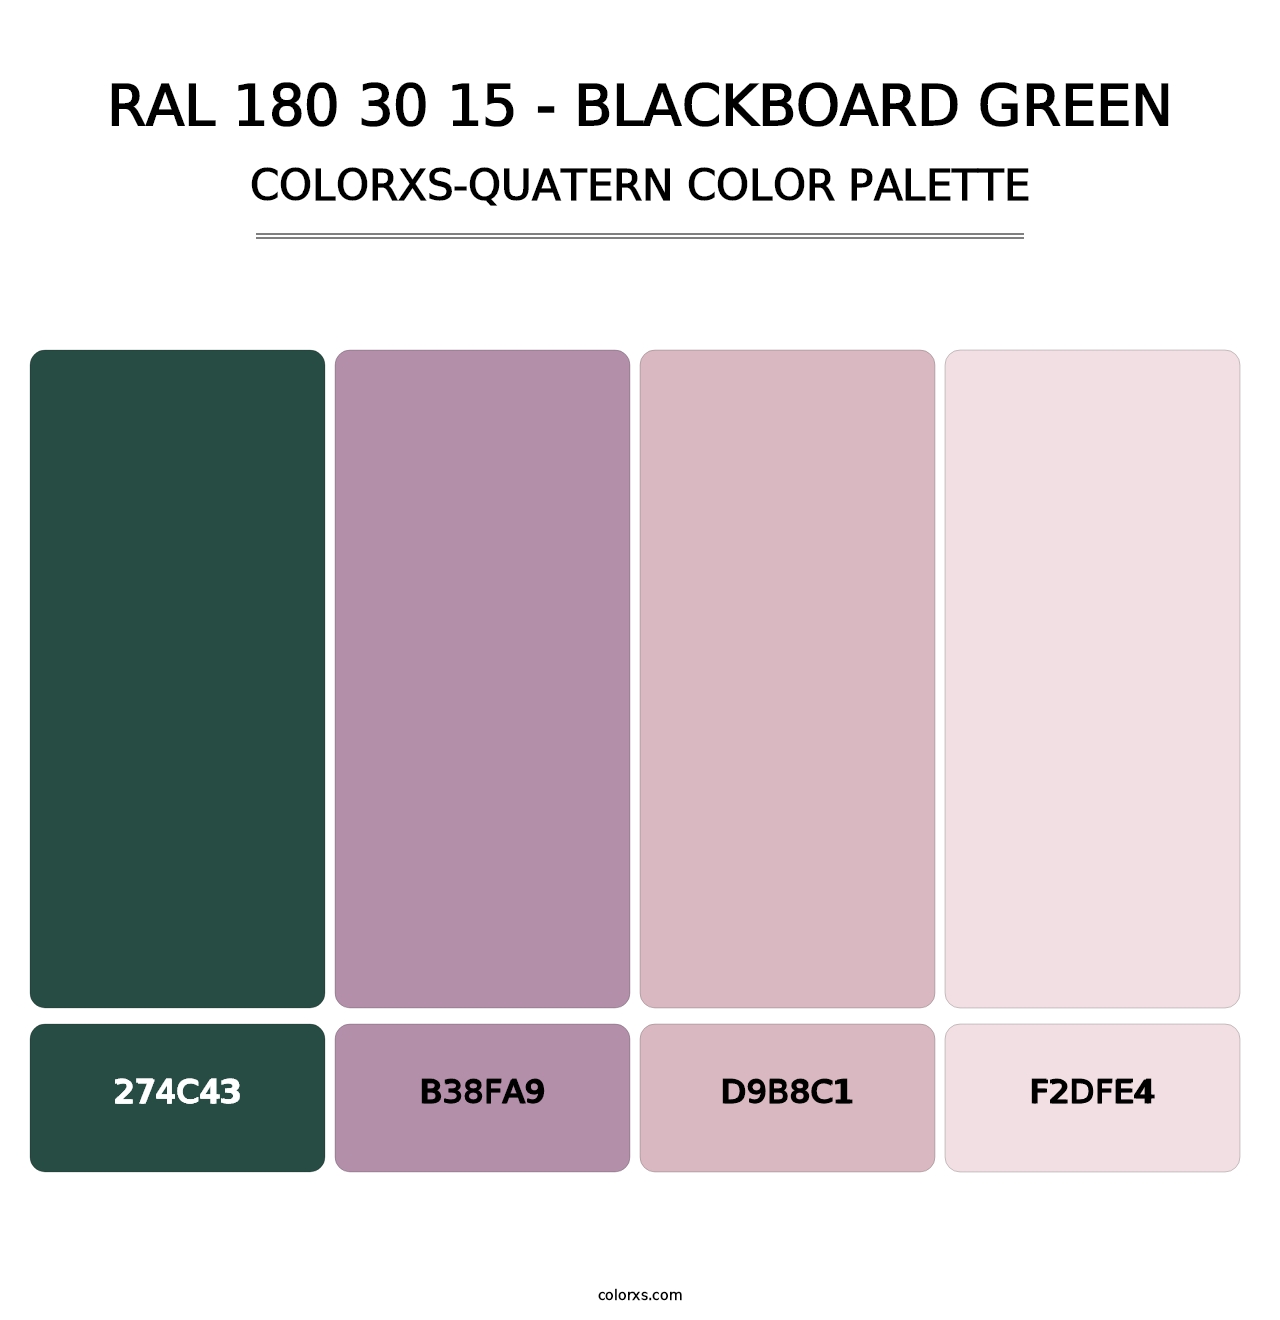 RAL 180 30 15 - Blackboard Green - Colorxs Quatern Palette